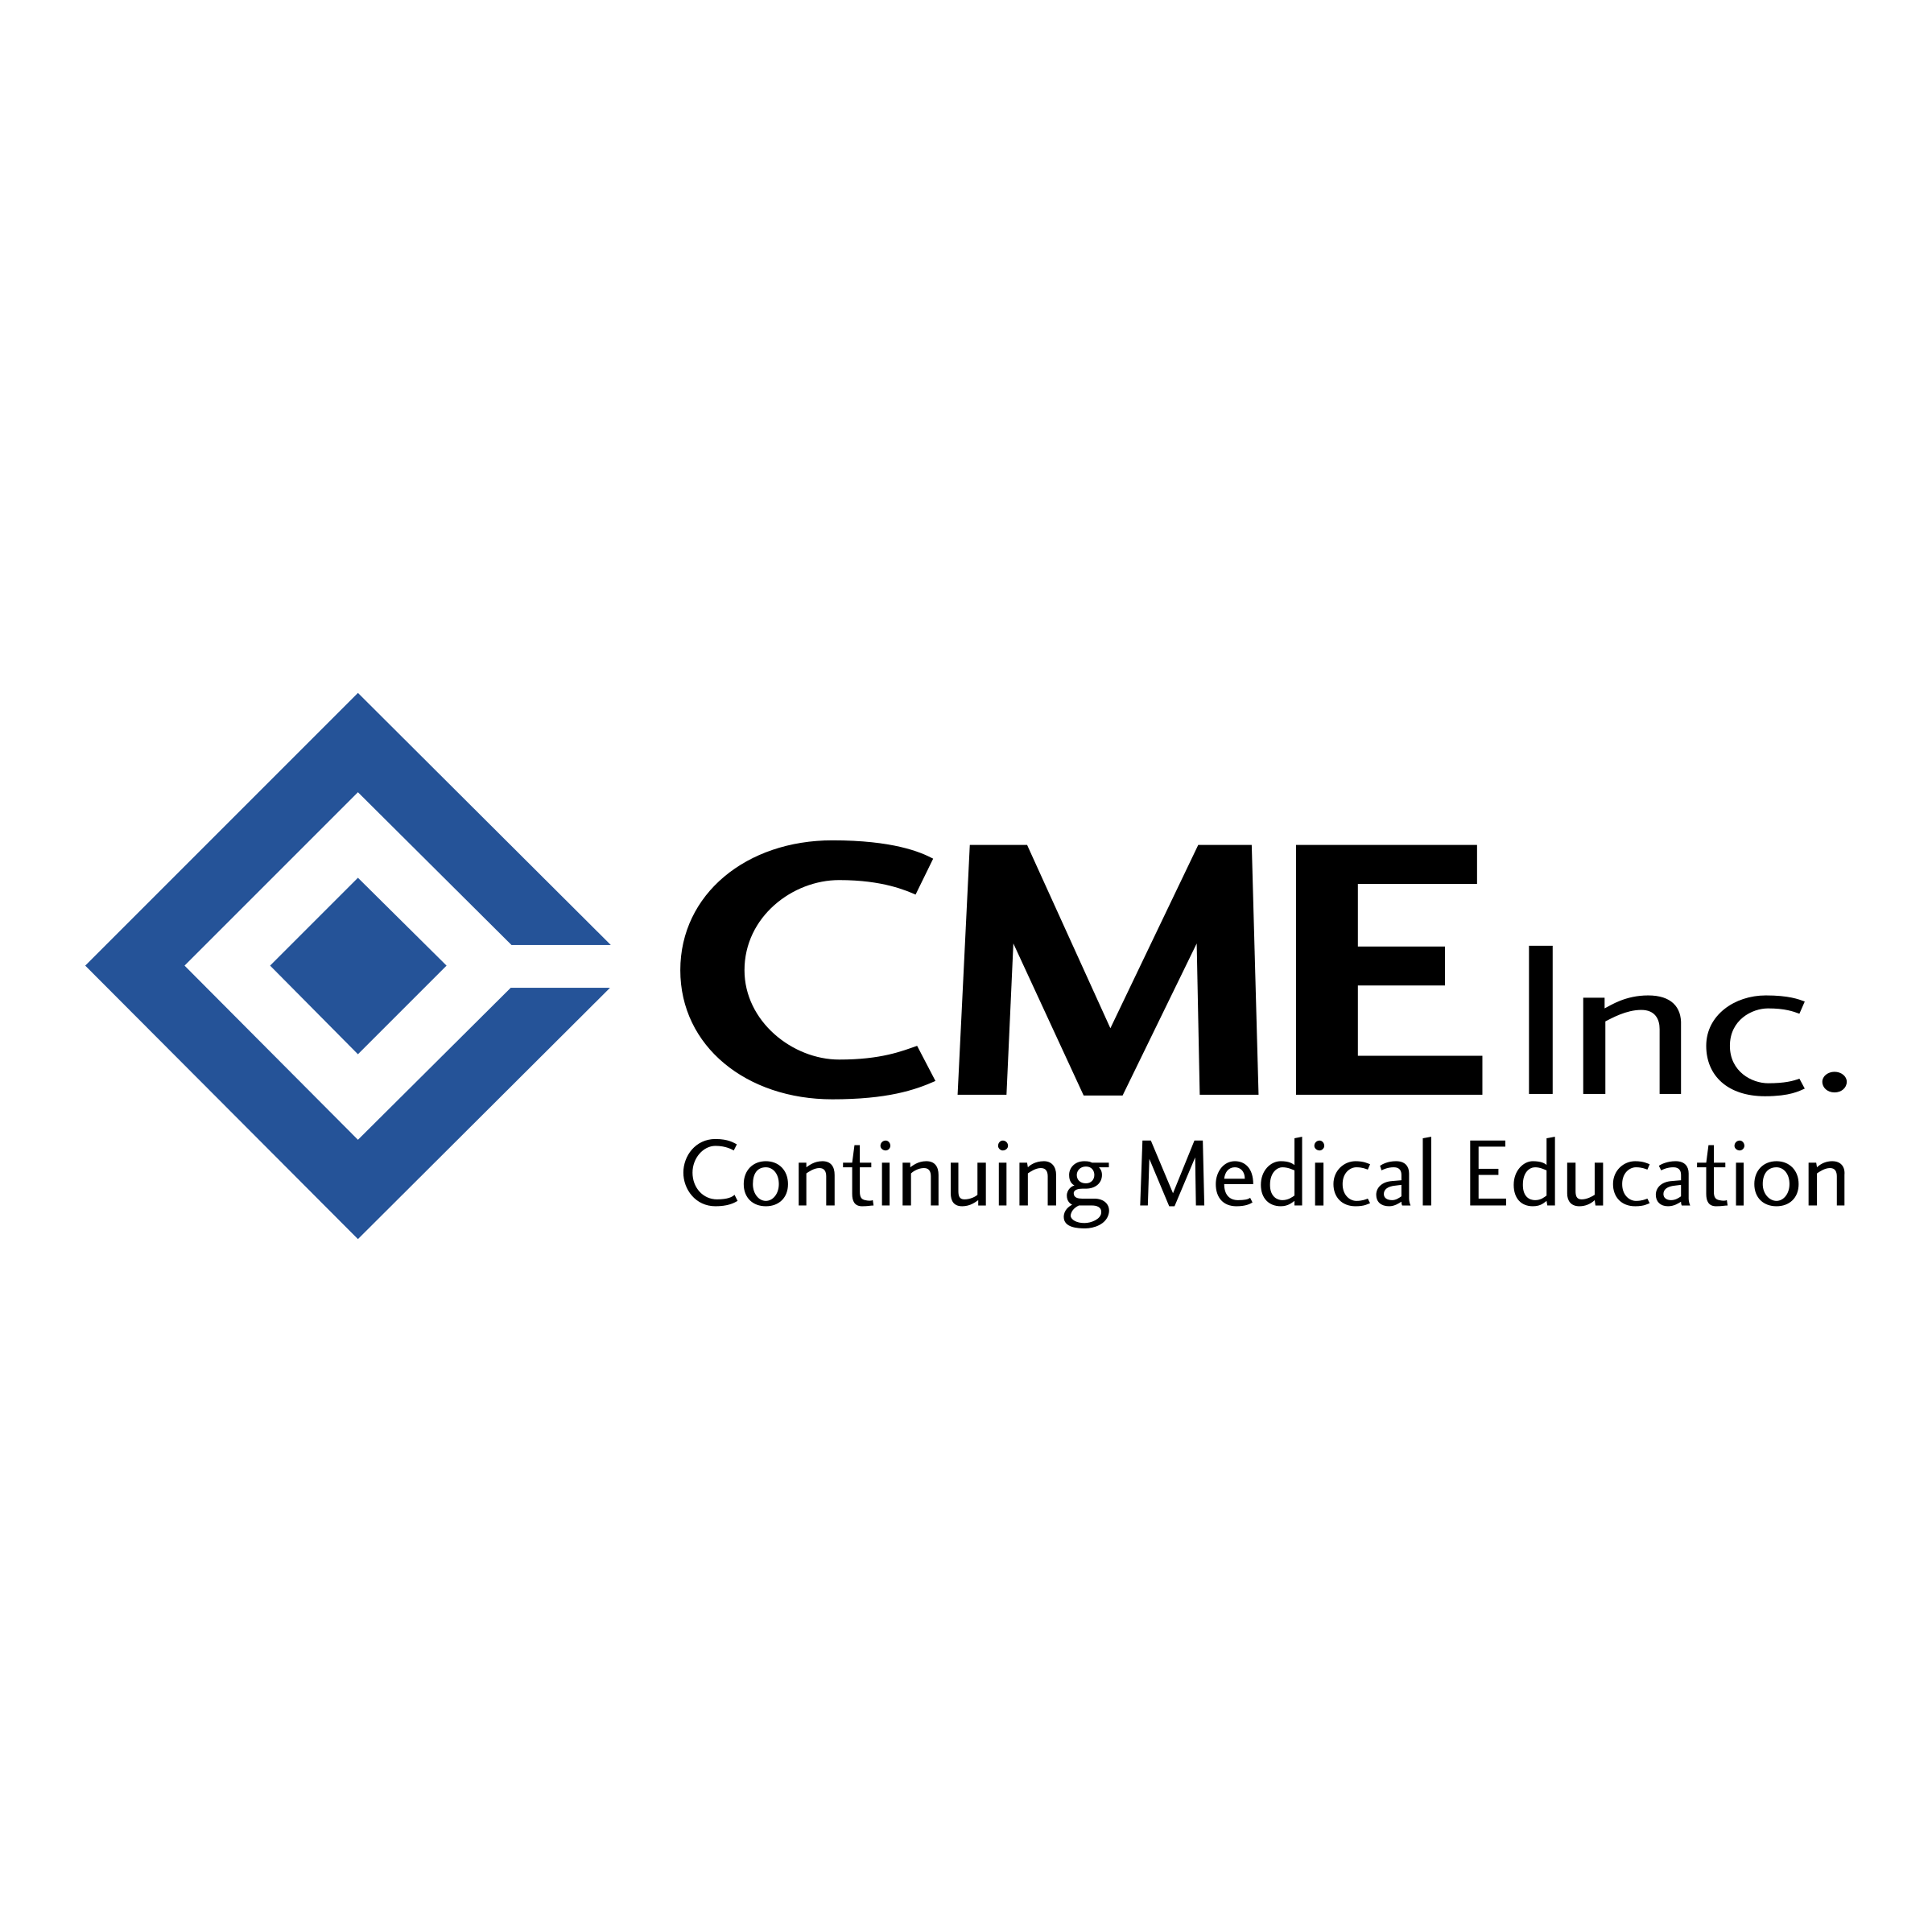 C.M.e. Logo - CME Logo PNG Transparent & SVG Vector